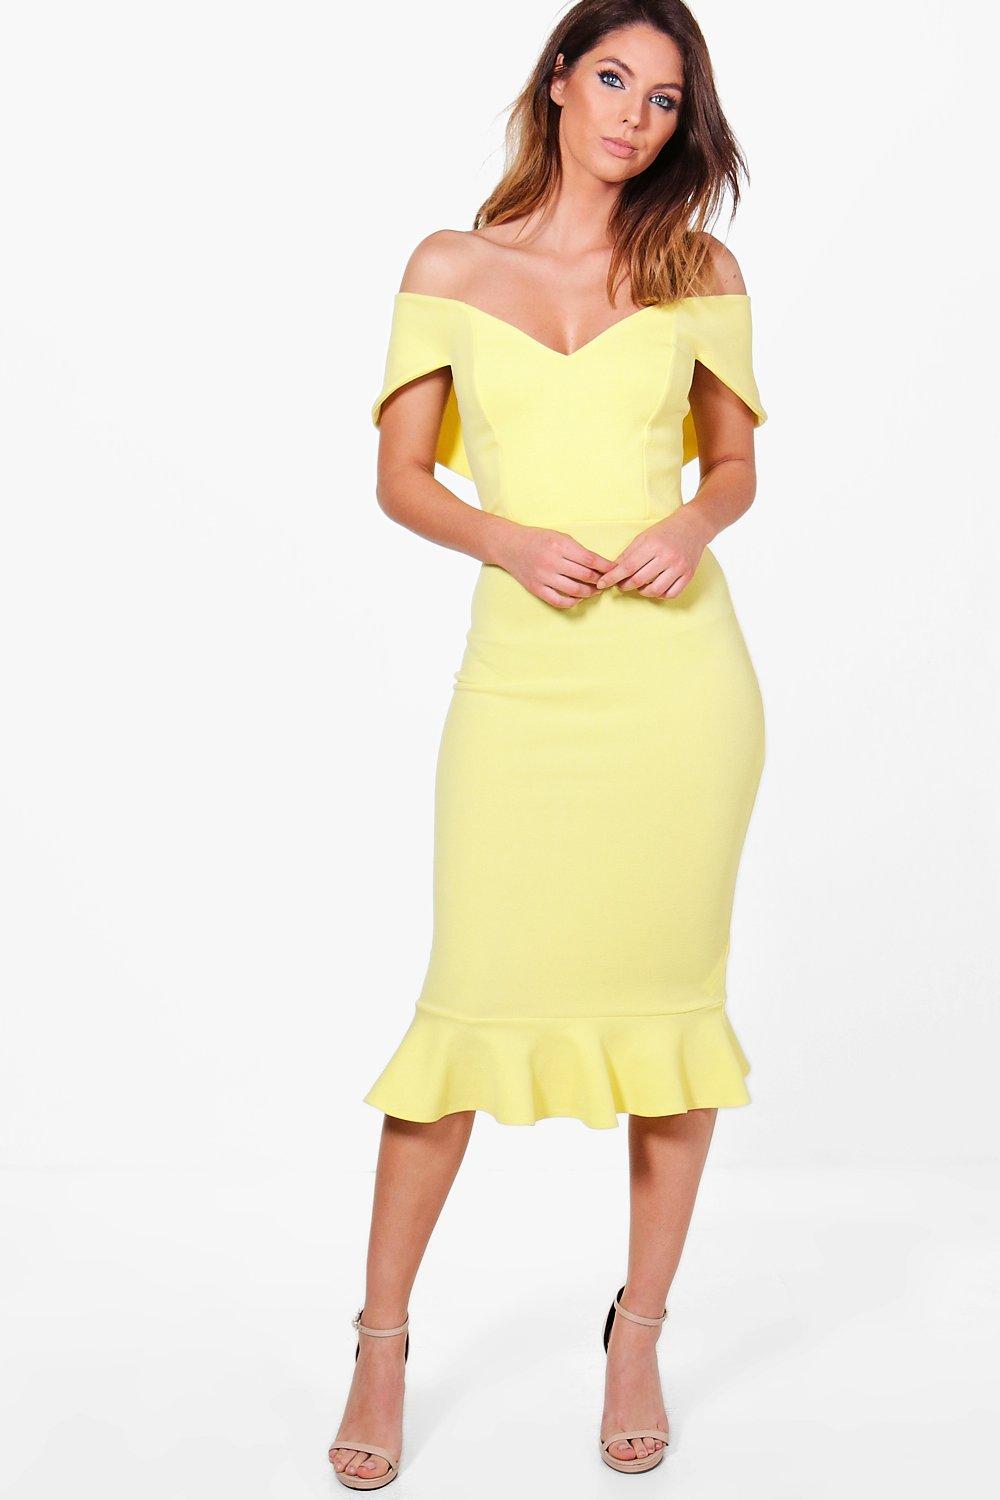 yellow off the shoulder midi dress